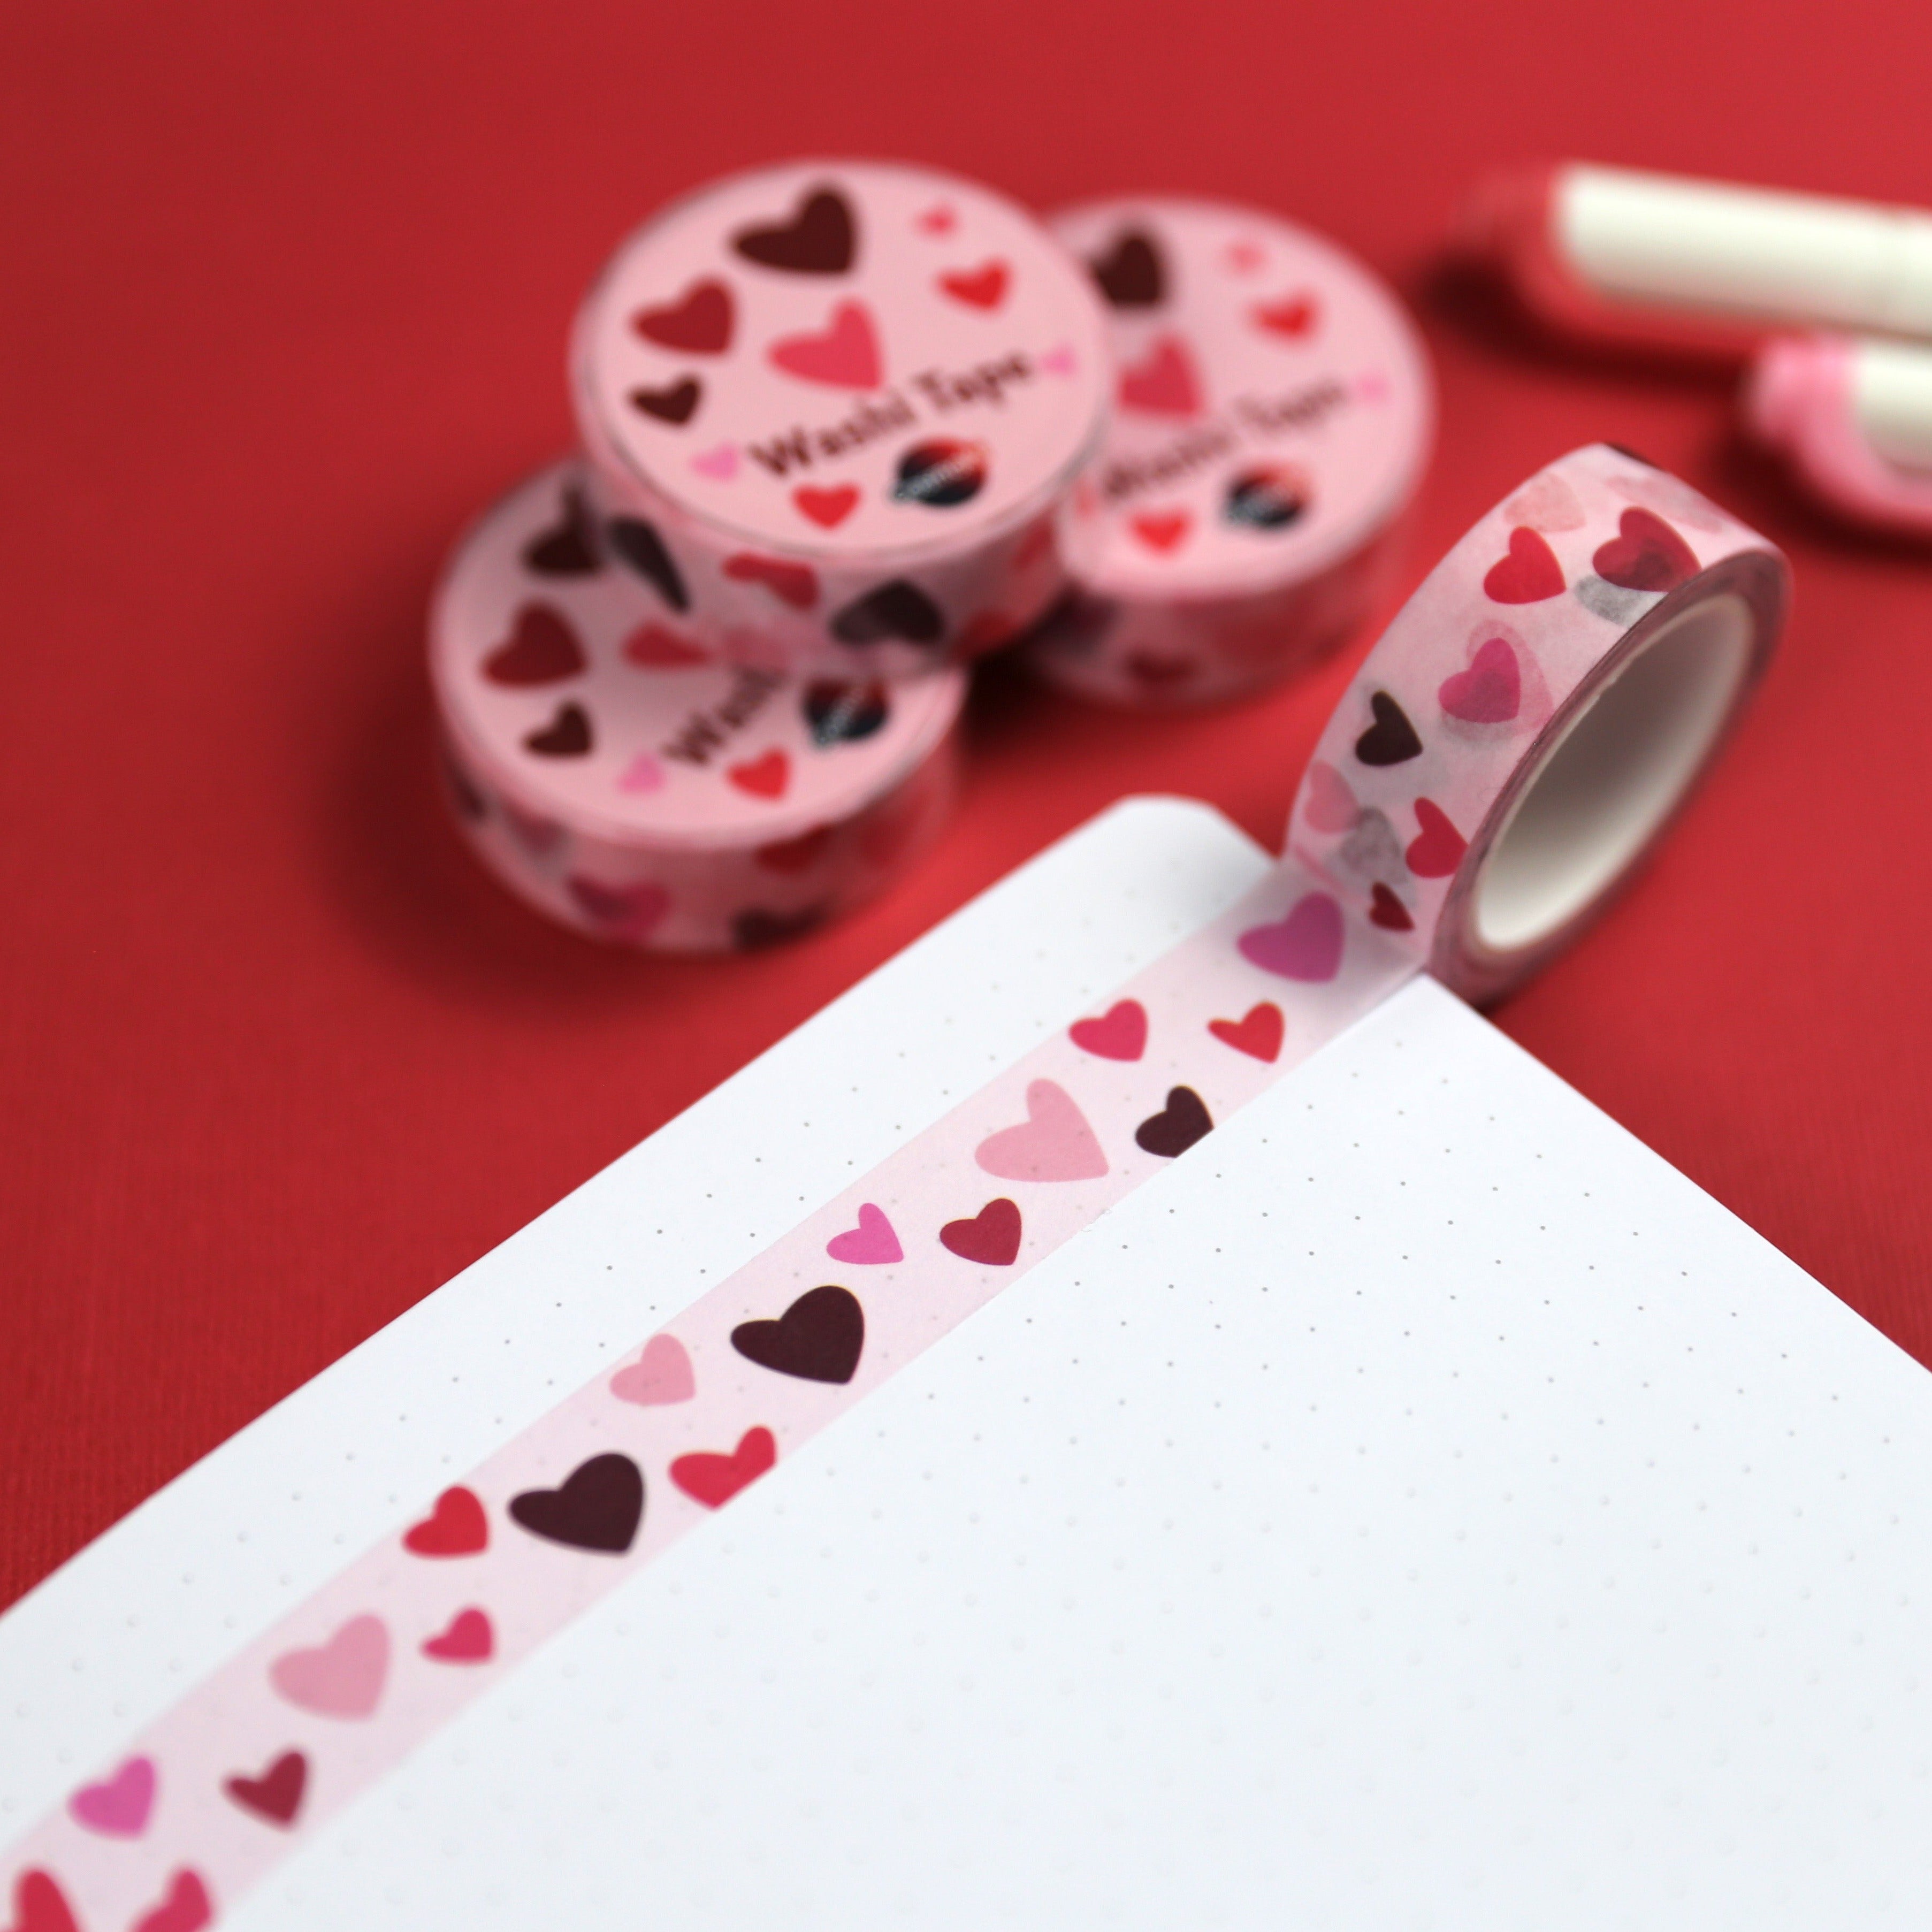 Glitter Heart Washi Tape Ornamental Hearts / Valentine Washi Tape 